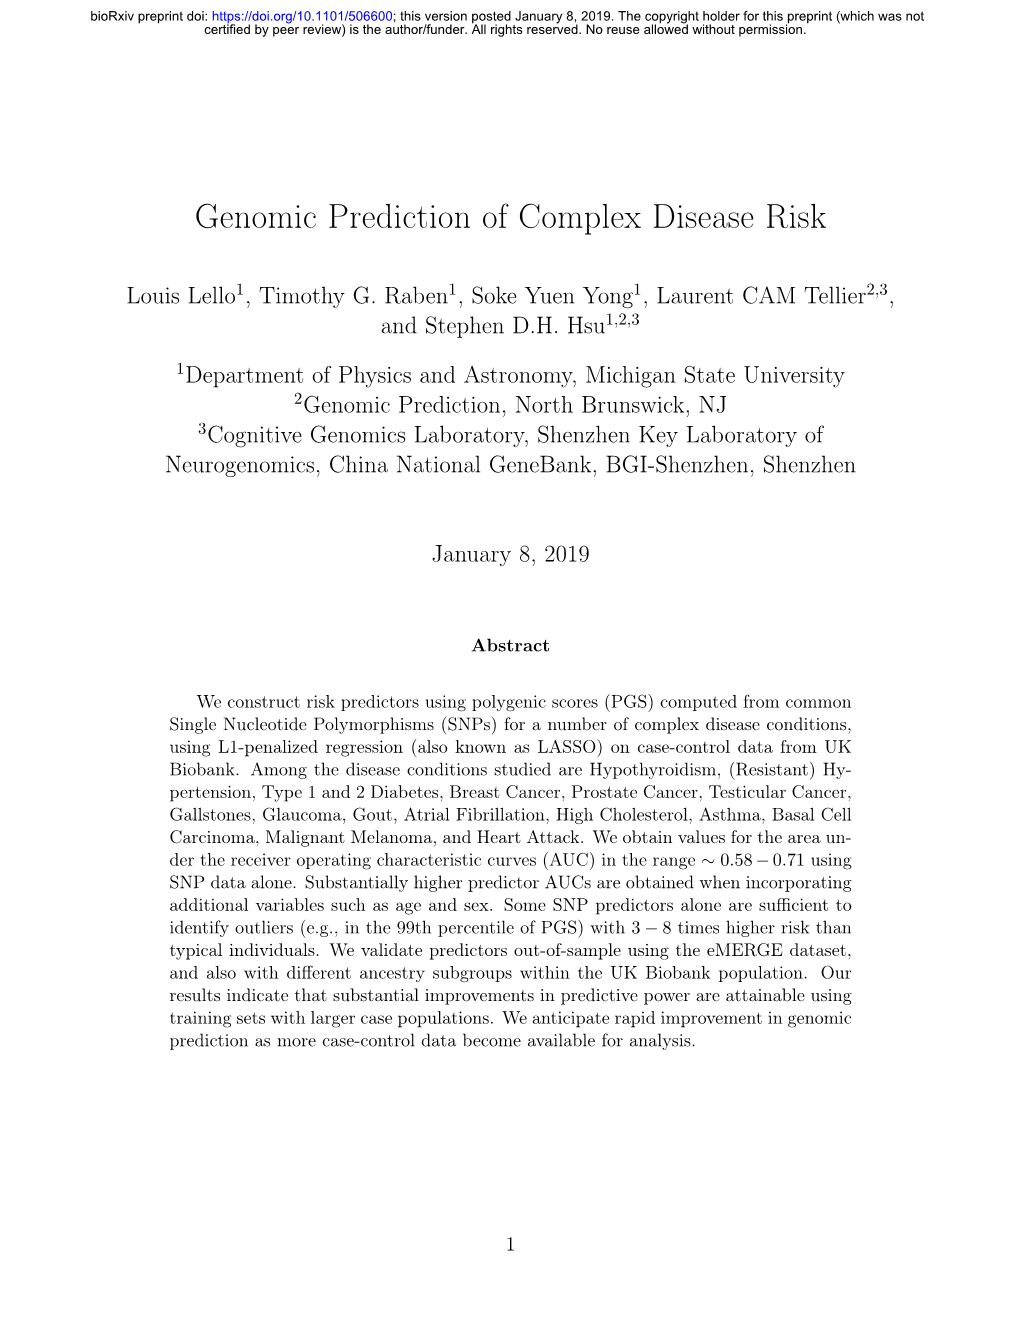 Genomic Prediction of Complex Disease Risk